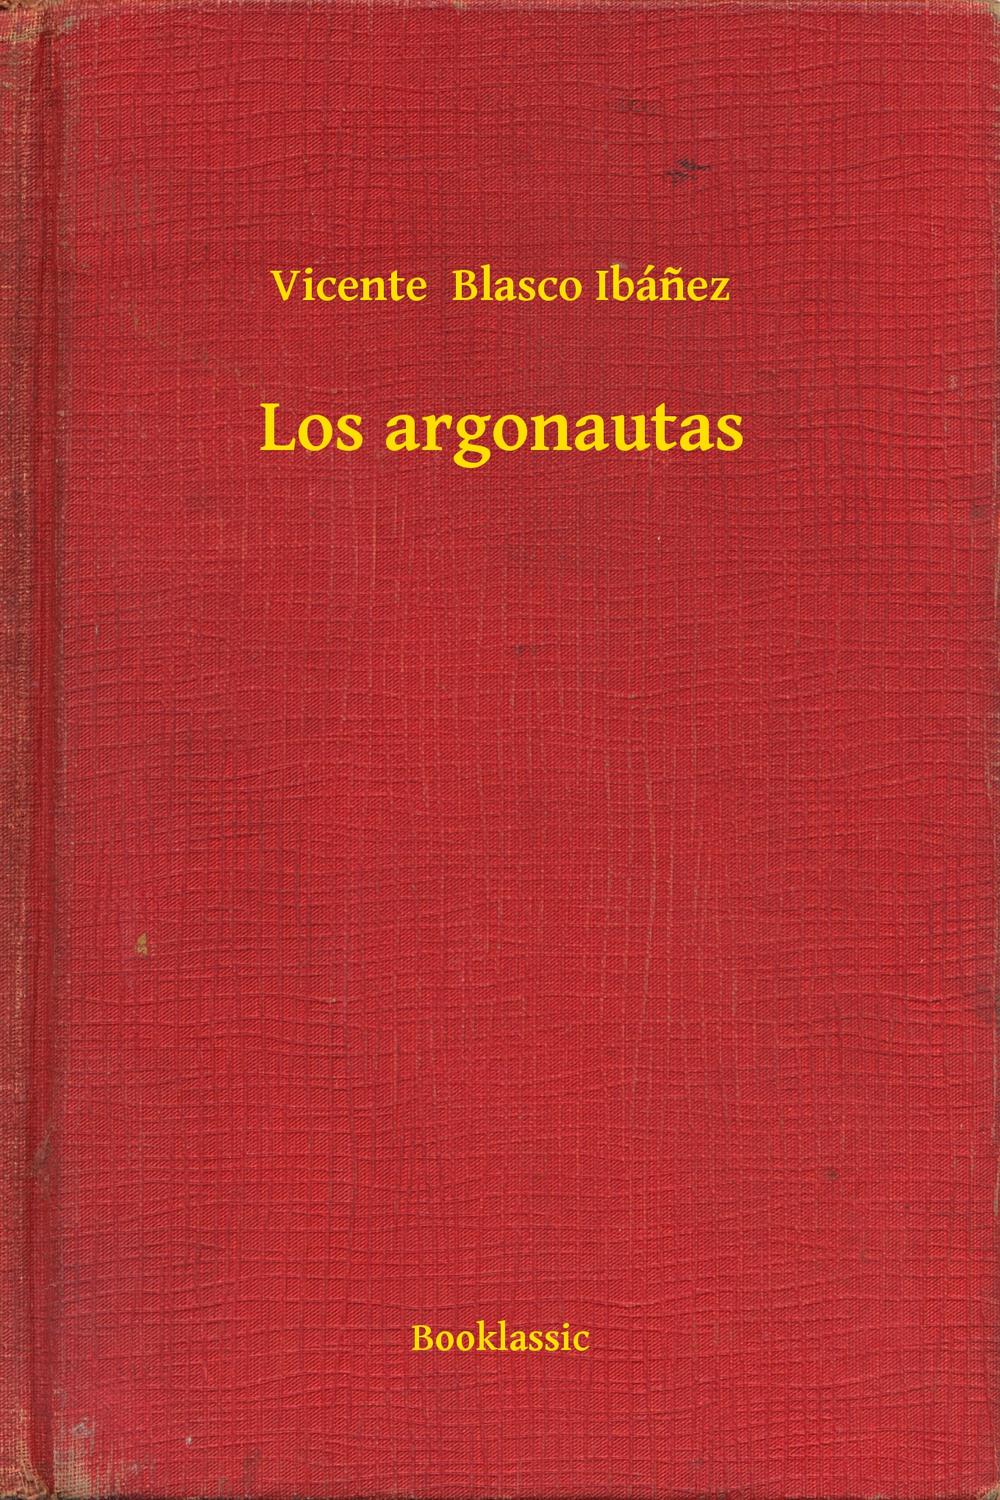 Los argonautas - Vicente  Blasco Ibánez